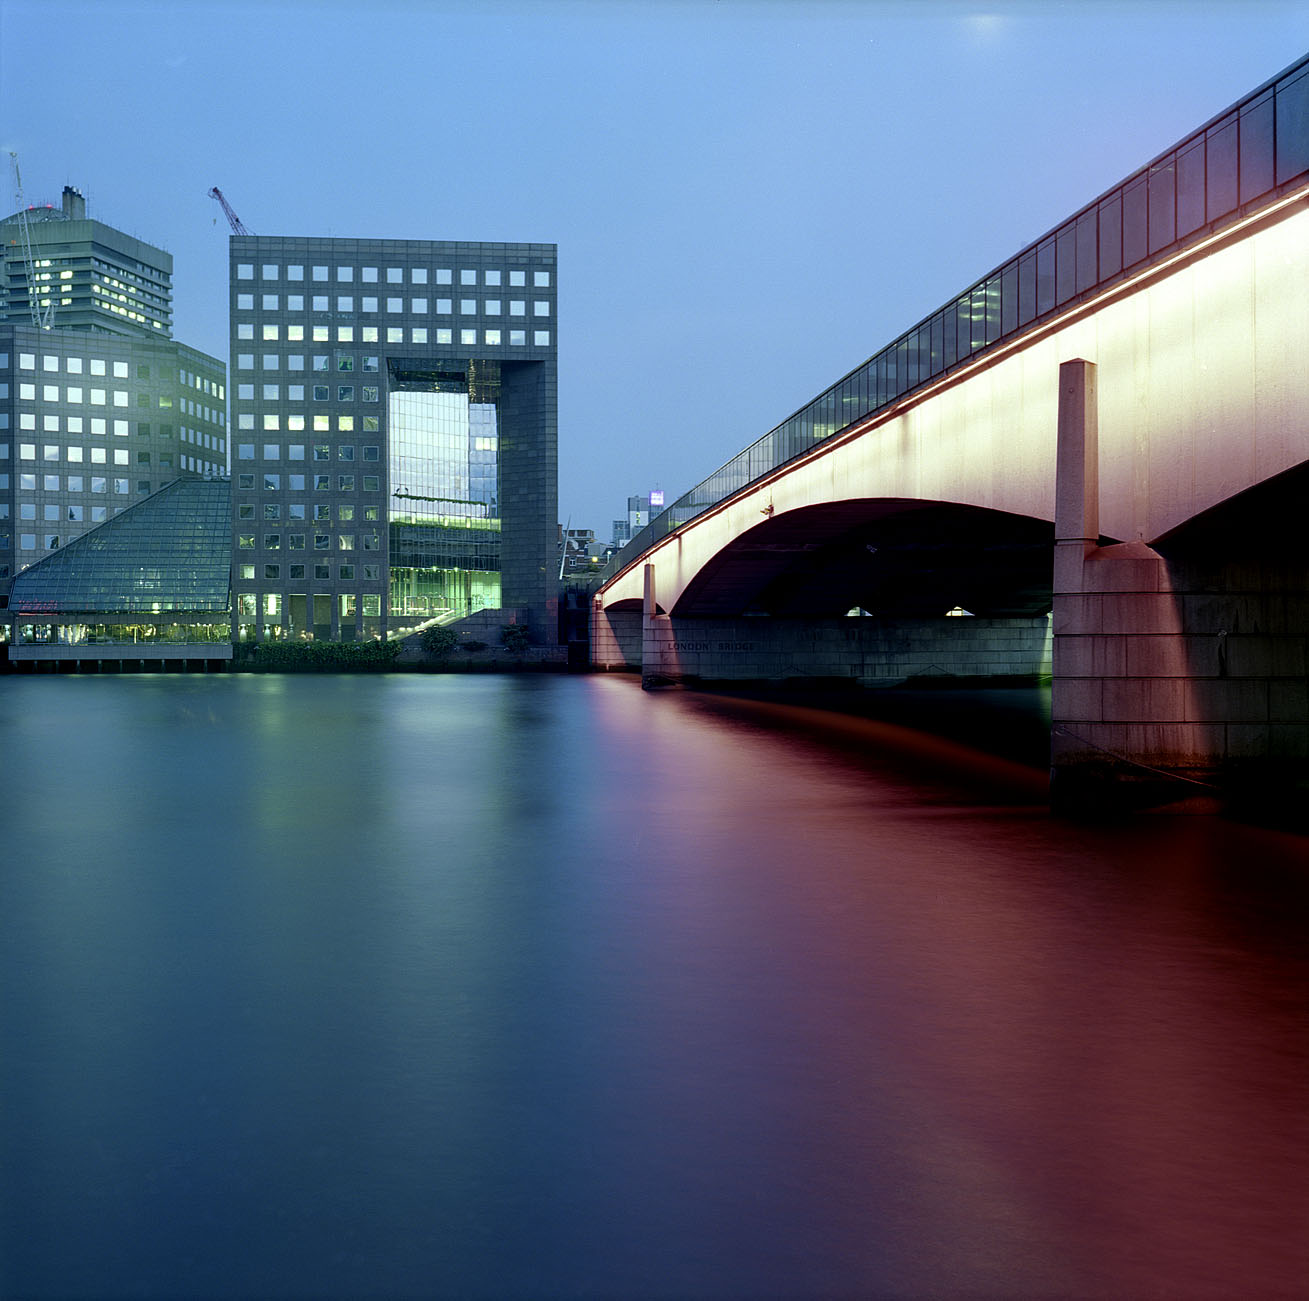 fotka / image London Bridge, Night in London